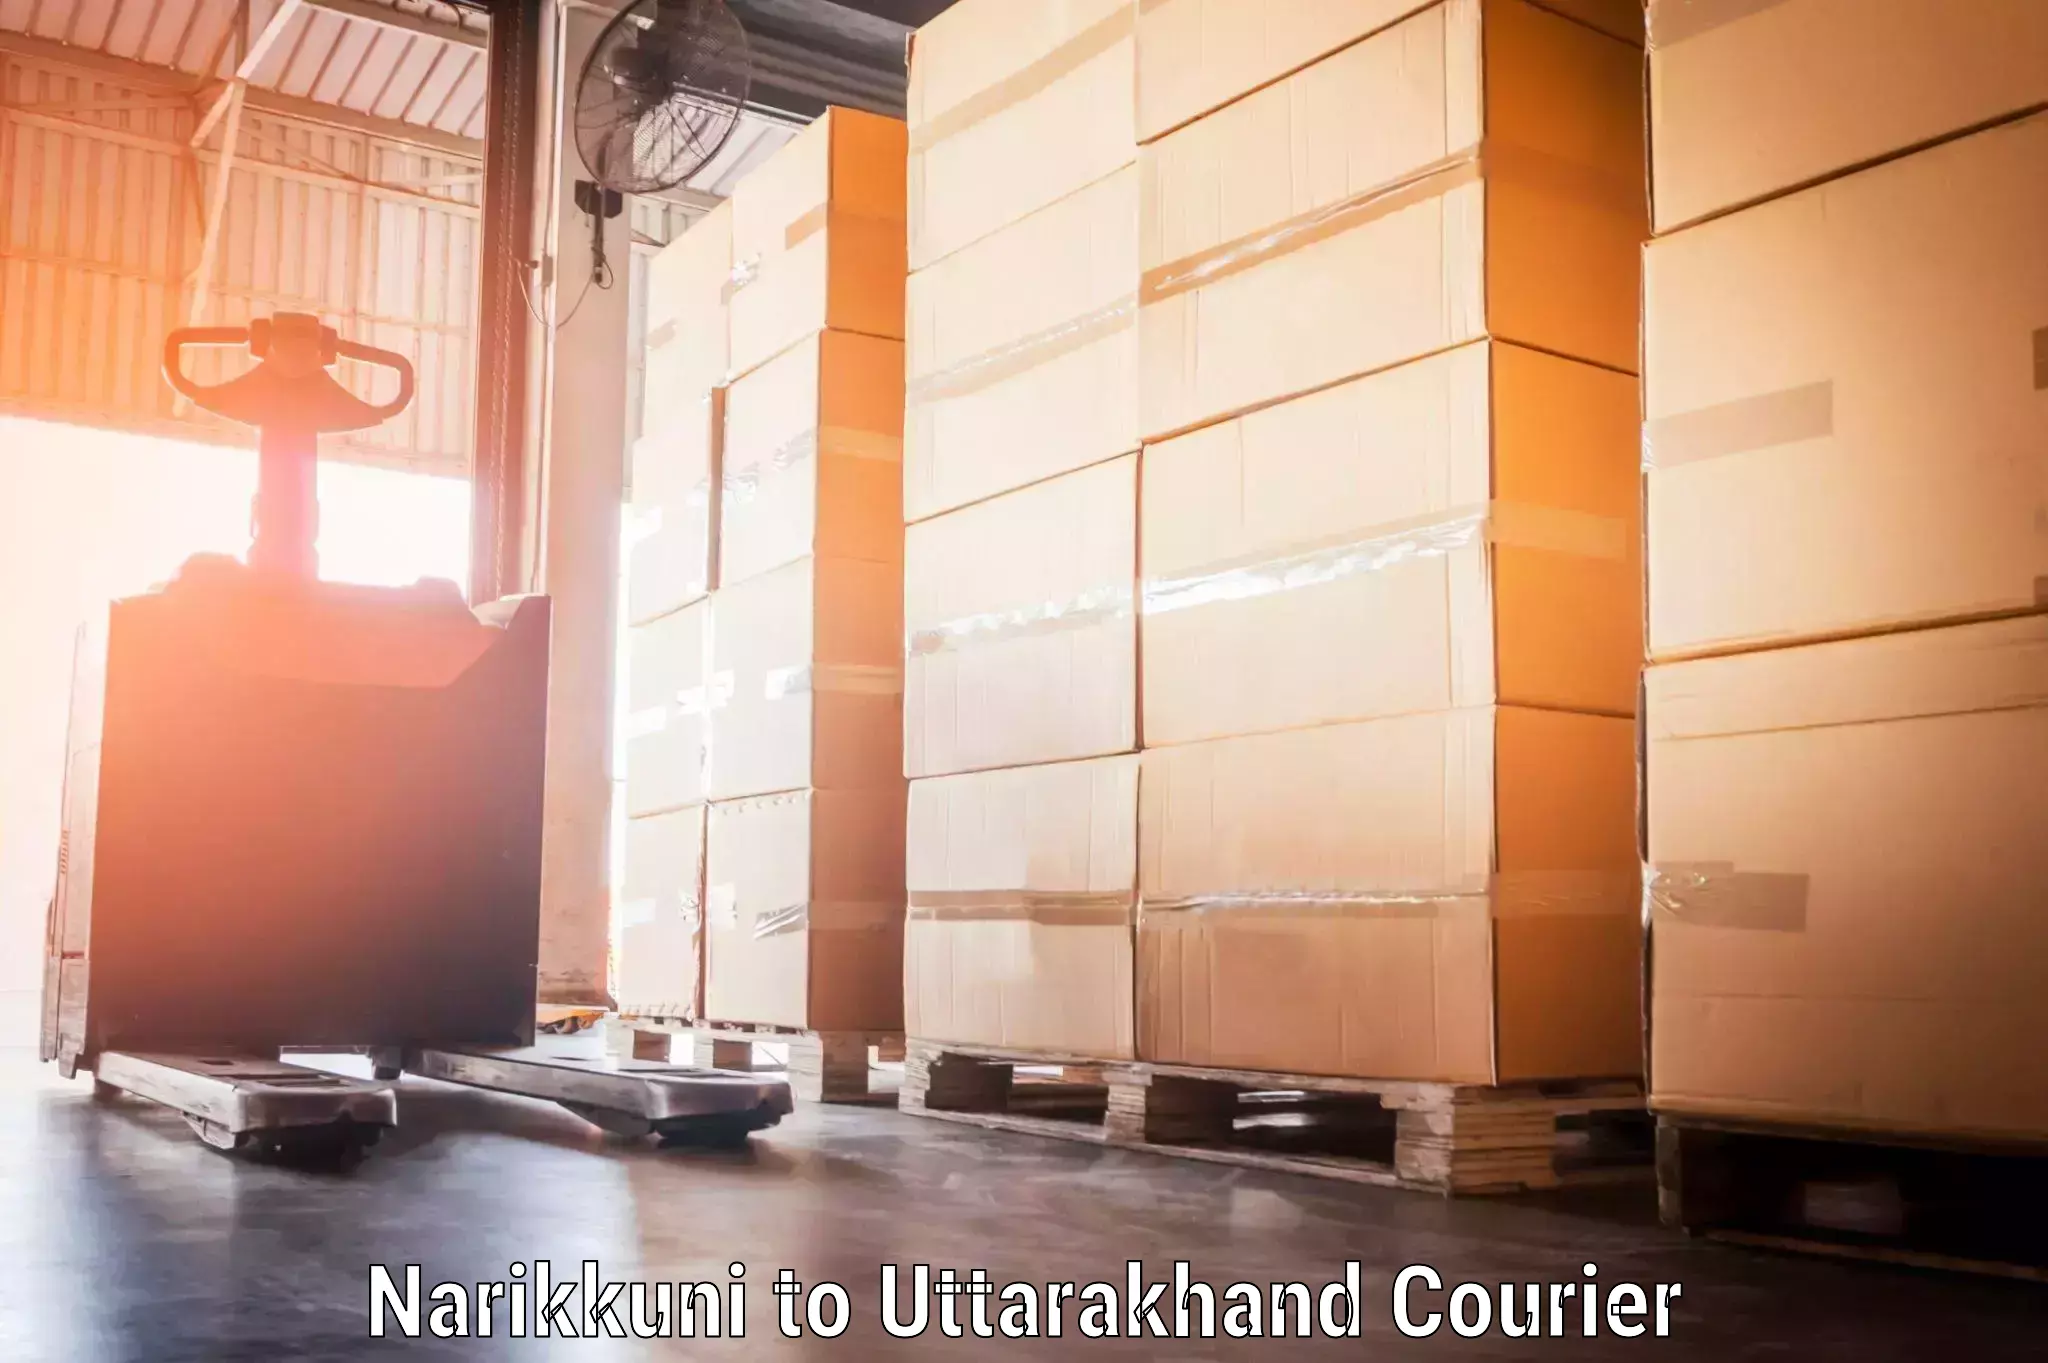 Baggage delivery scheduling Narikkuni to Uttarakhand